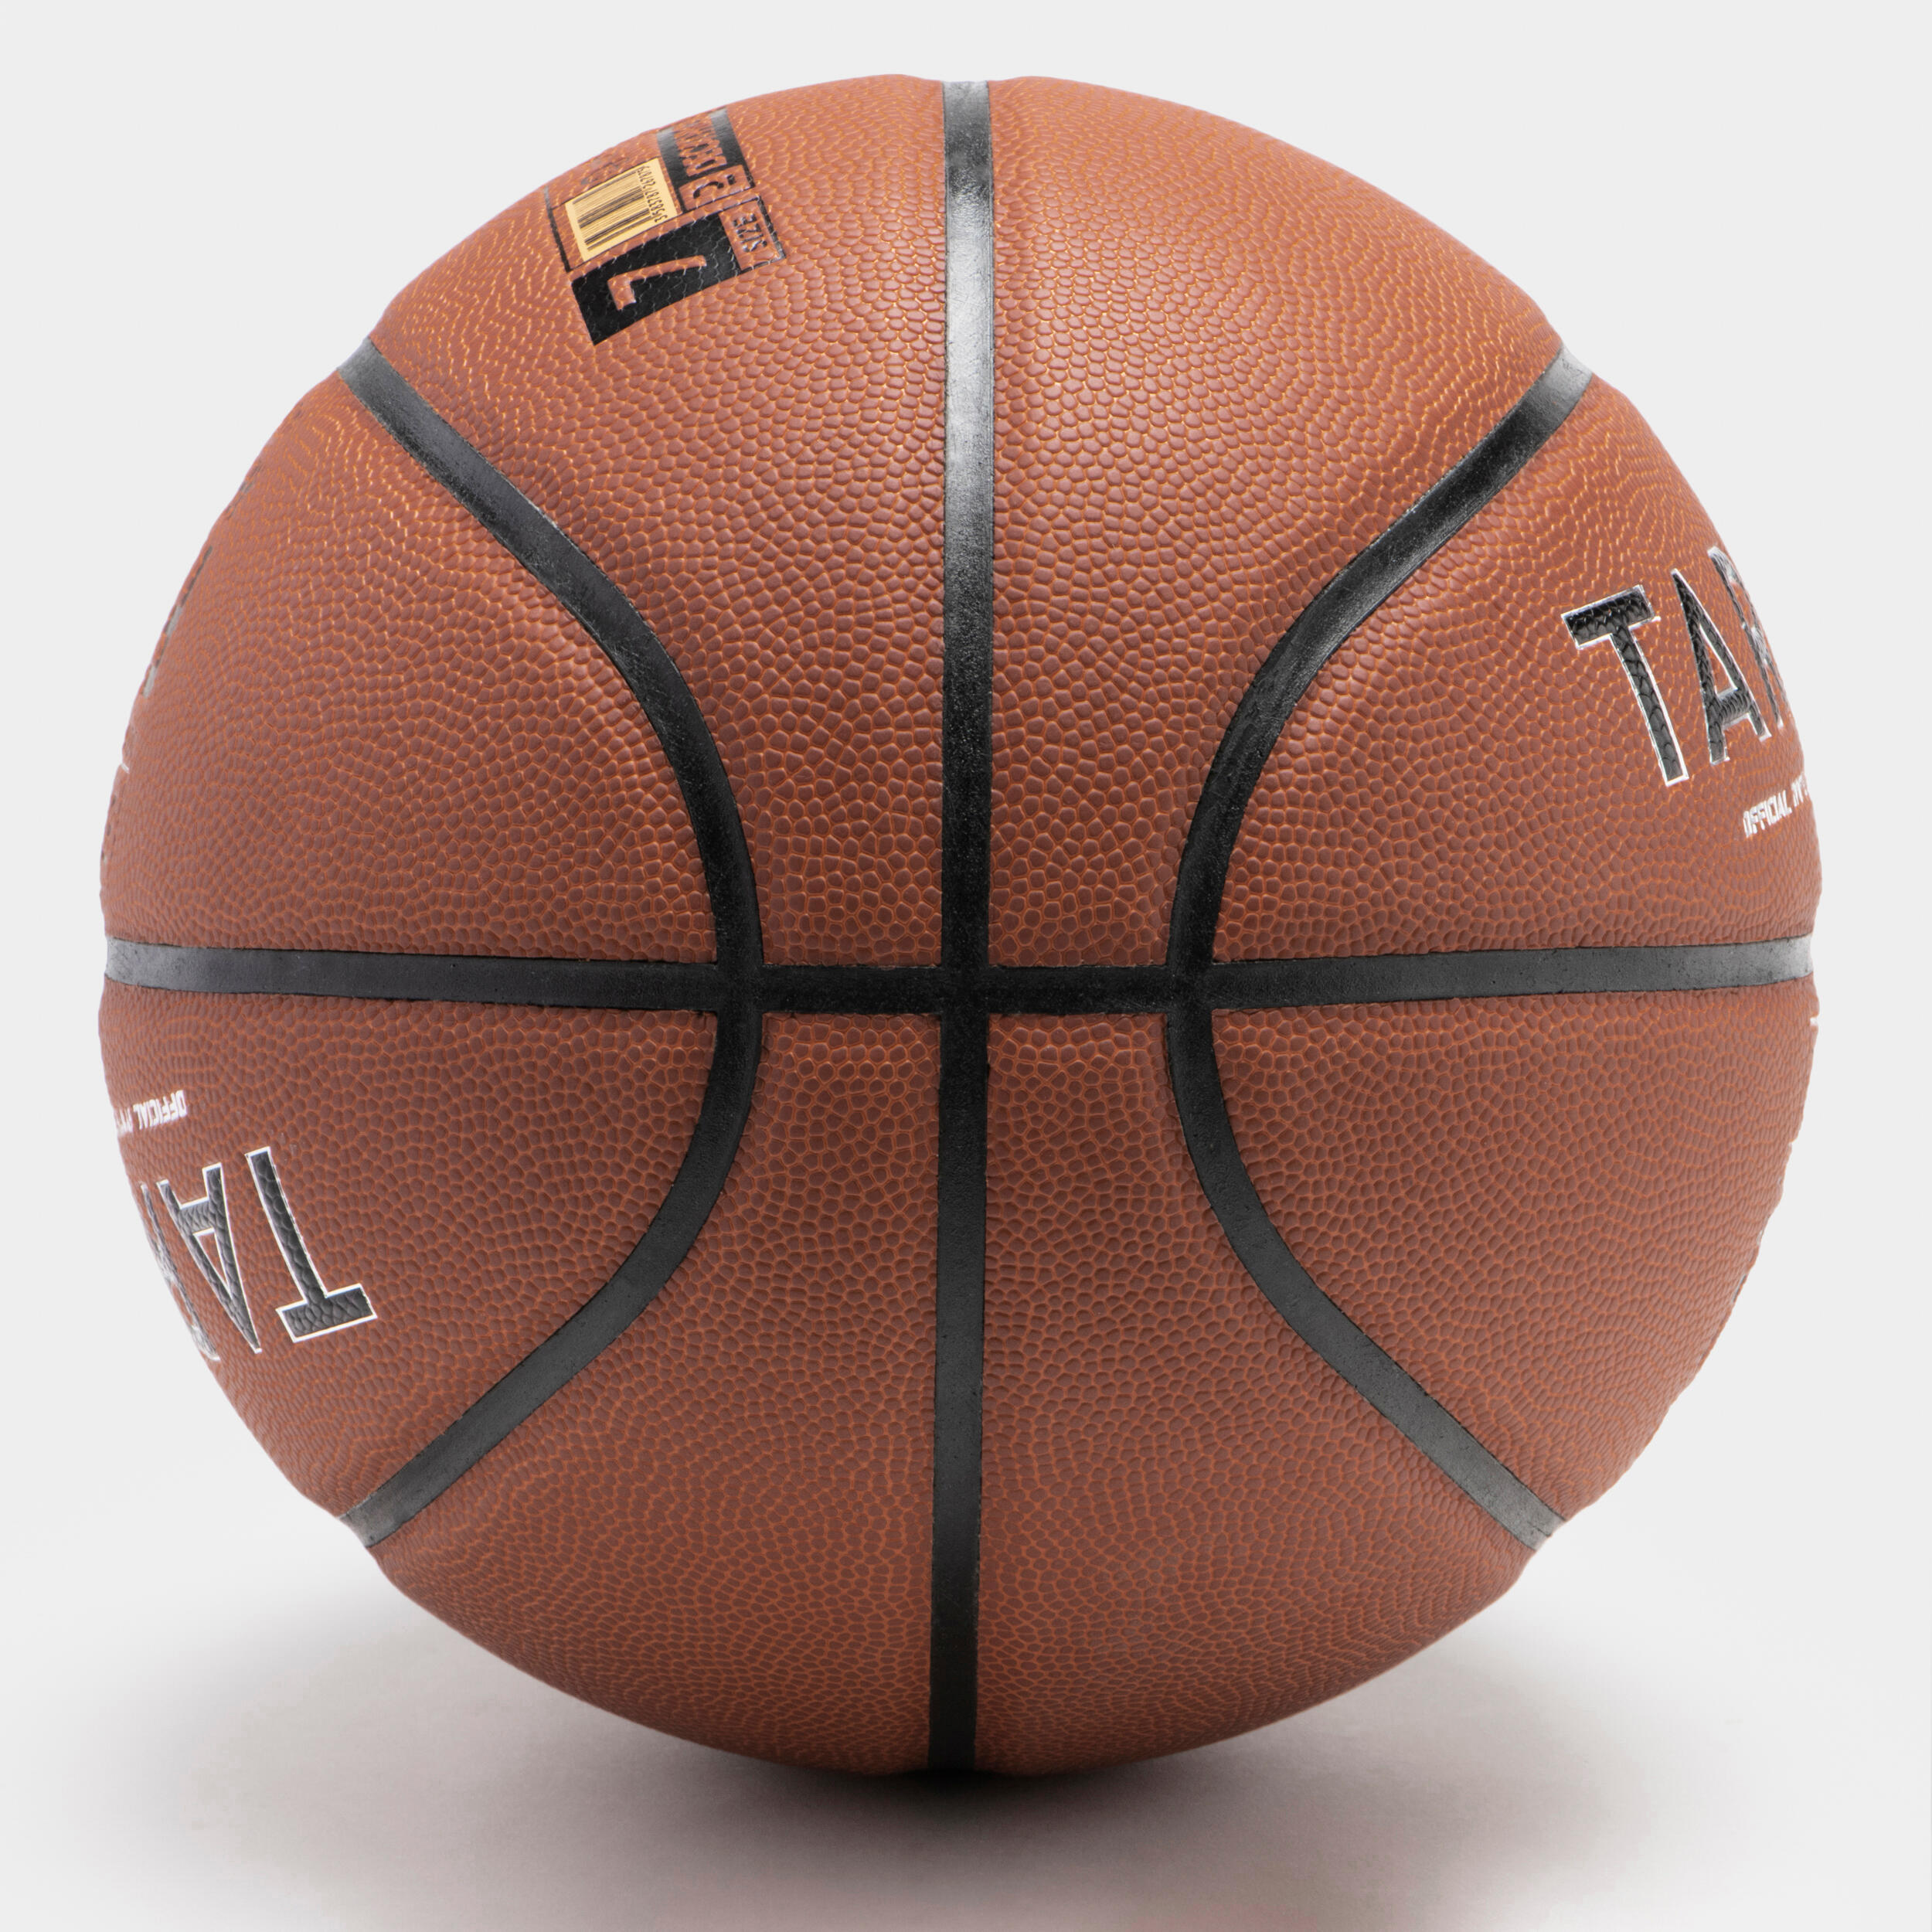 Size 7 Basketball BT500 - Brown/FIBA 4/8